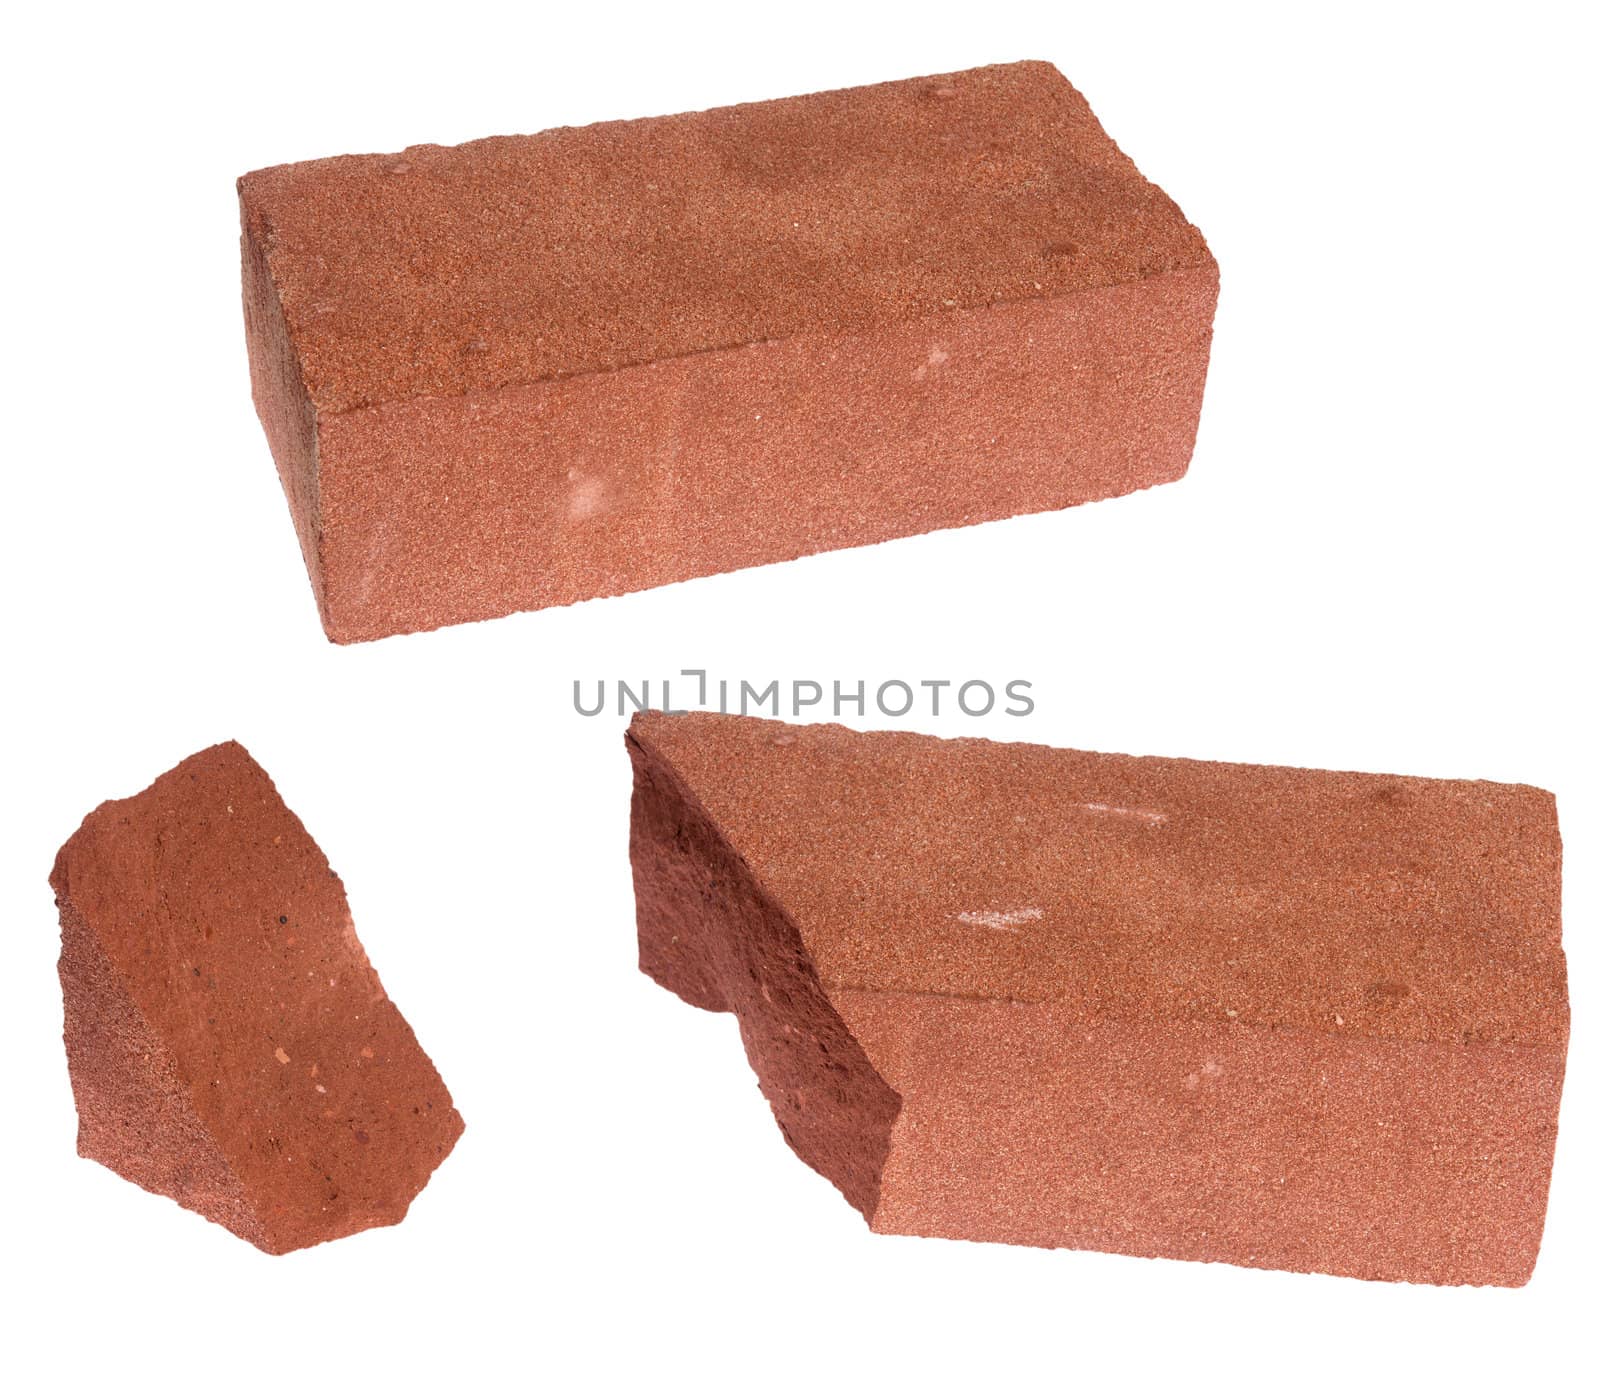 (Broken) brick by tonlammerts